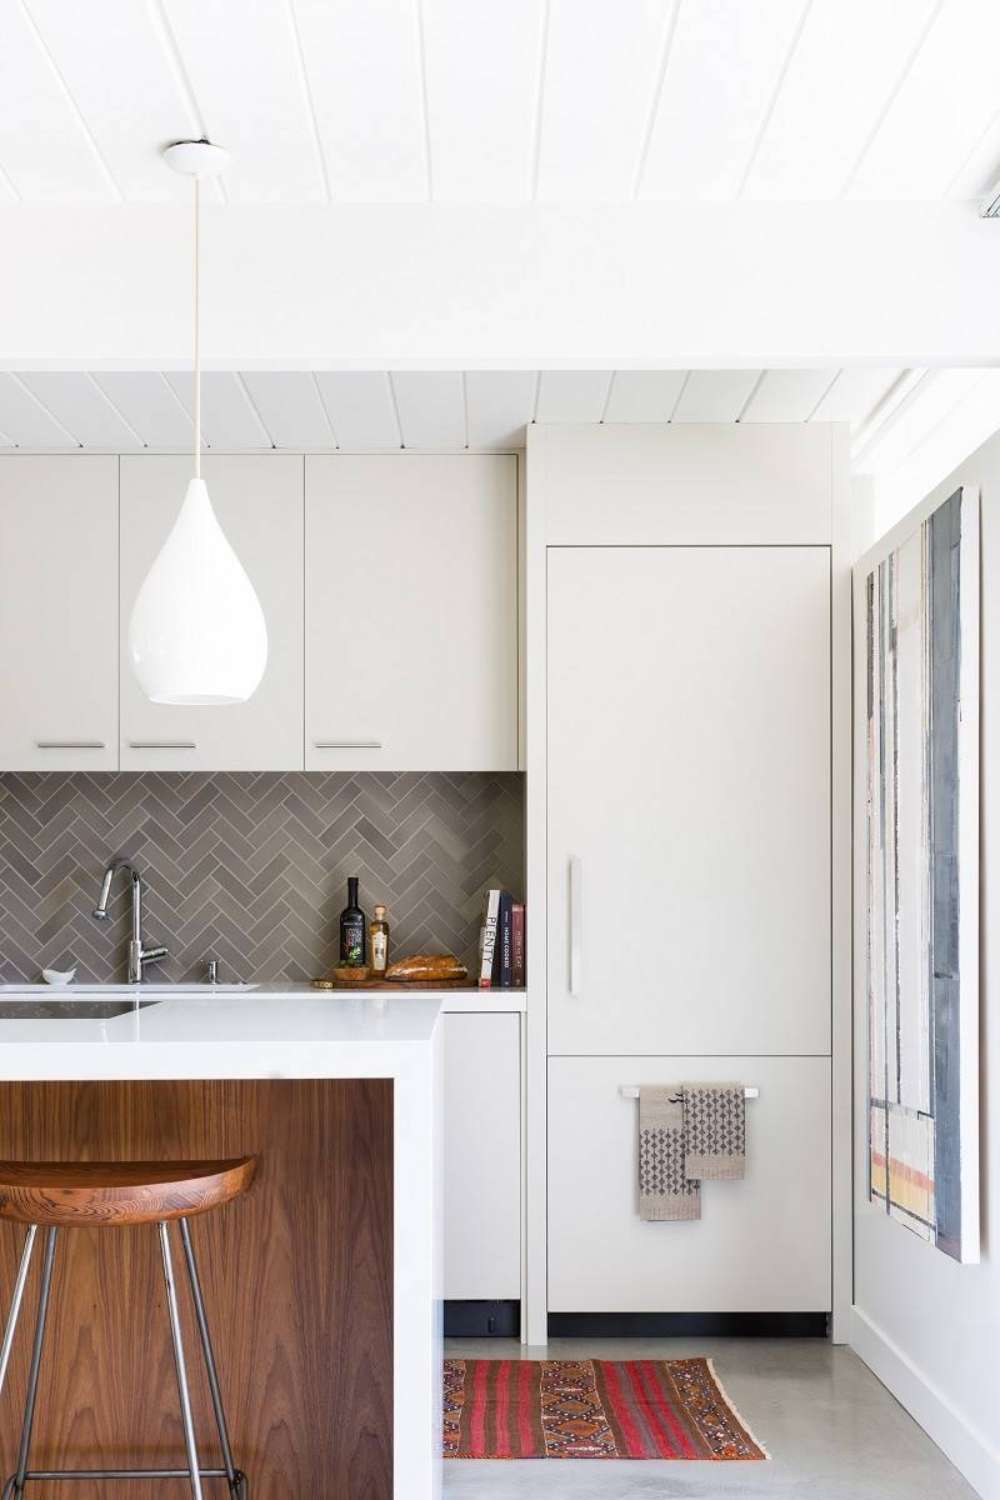 White Kitchen Cabinets With Herringbone Backsplash